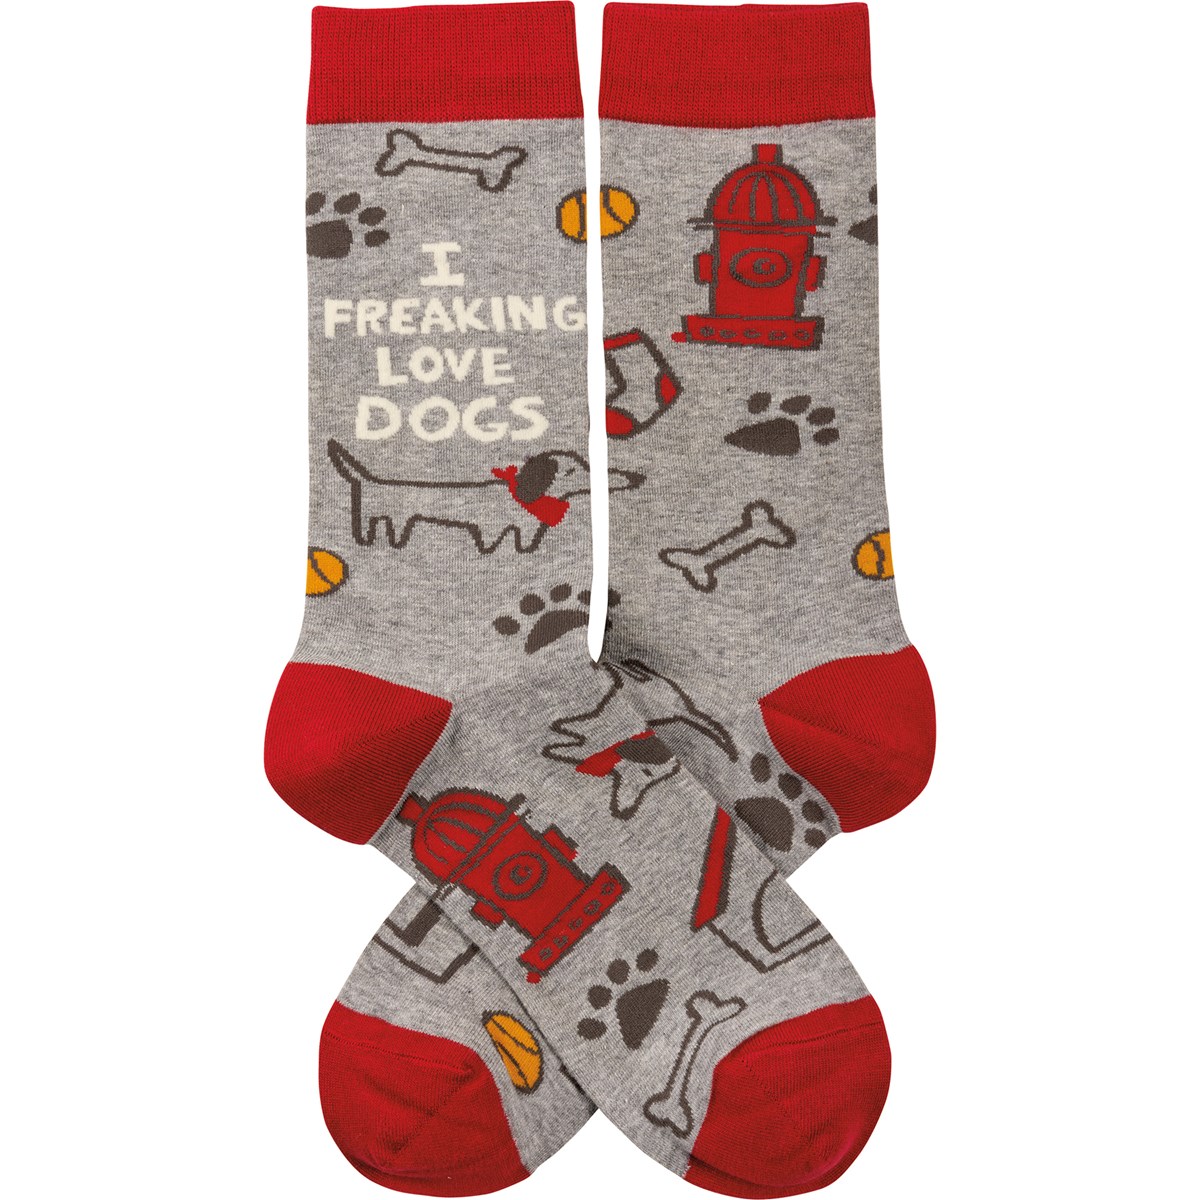 I Freaking Love Dogs Socks - Cotton, Nylon, Spandex